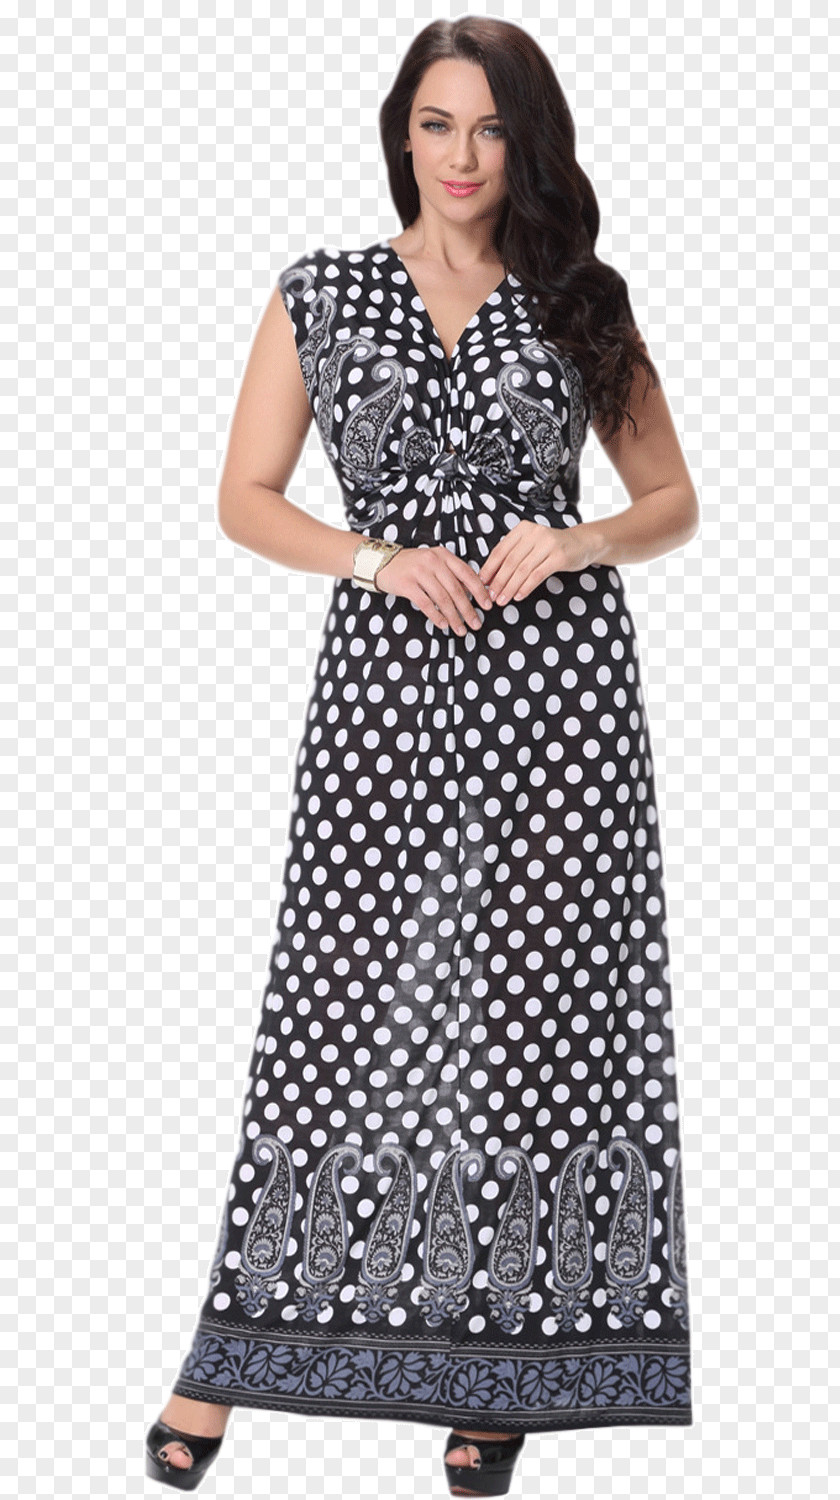 Plus-size Clothing Dress Polka Dot Sleeve Neckline PNG